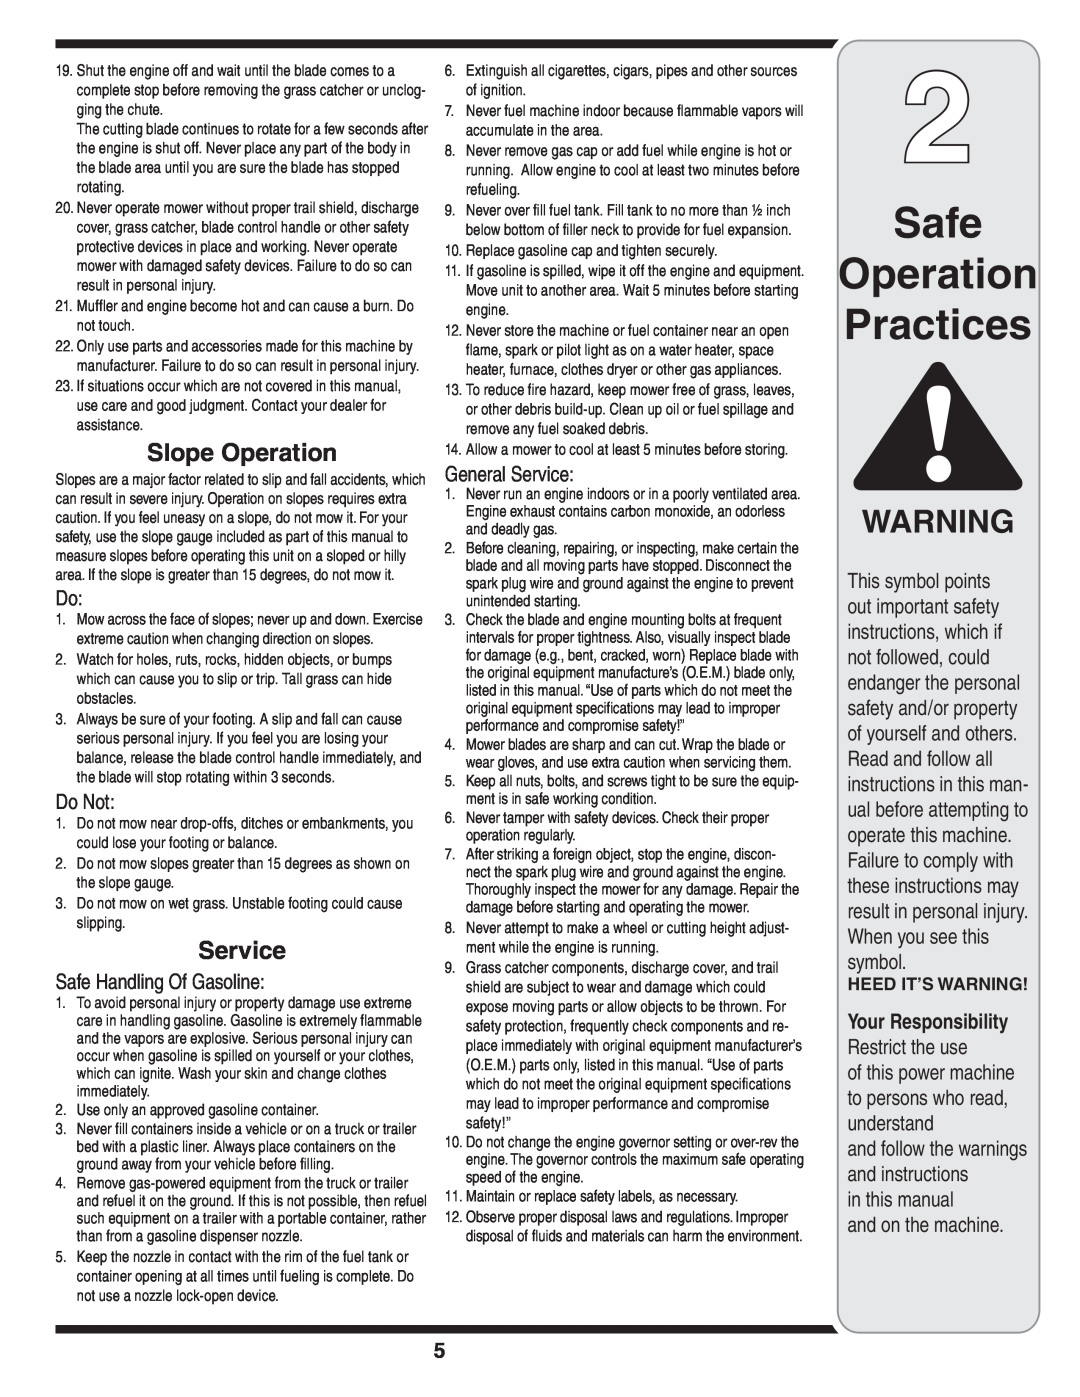 MTD Series 580 warranty Safe Operation Practices, Slope Operation, Do Not, Safe Handling Of Gasoline, General Service 